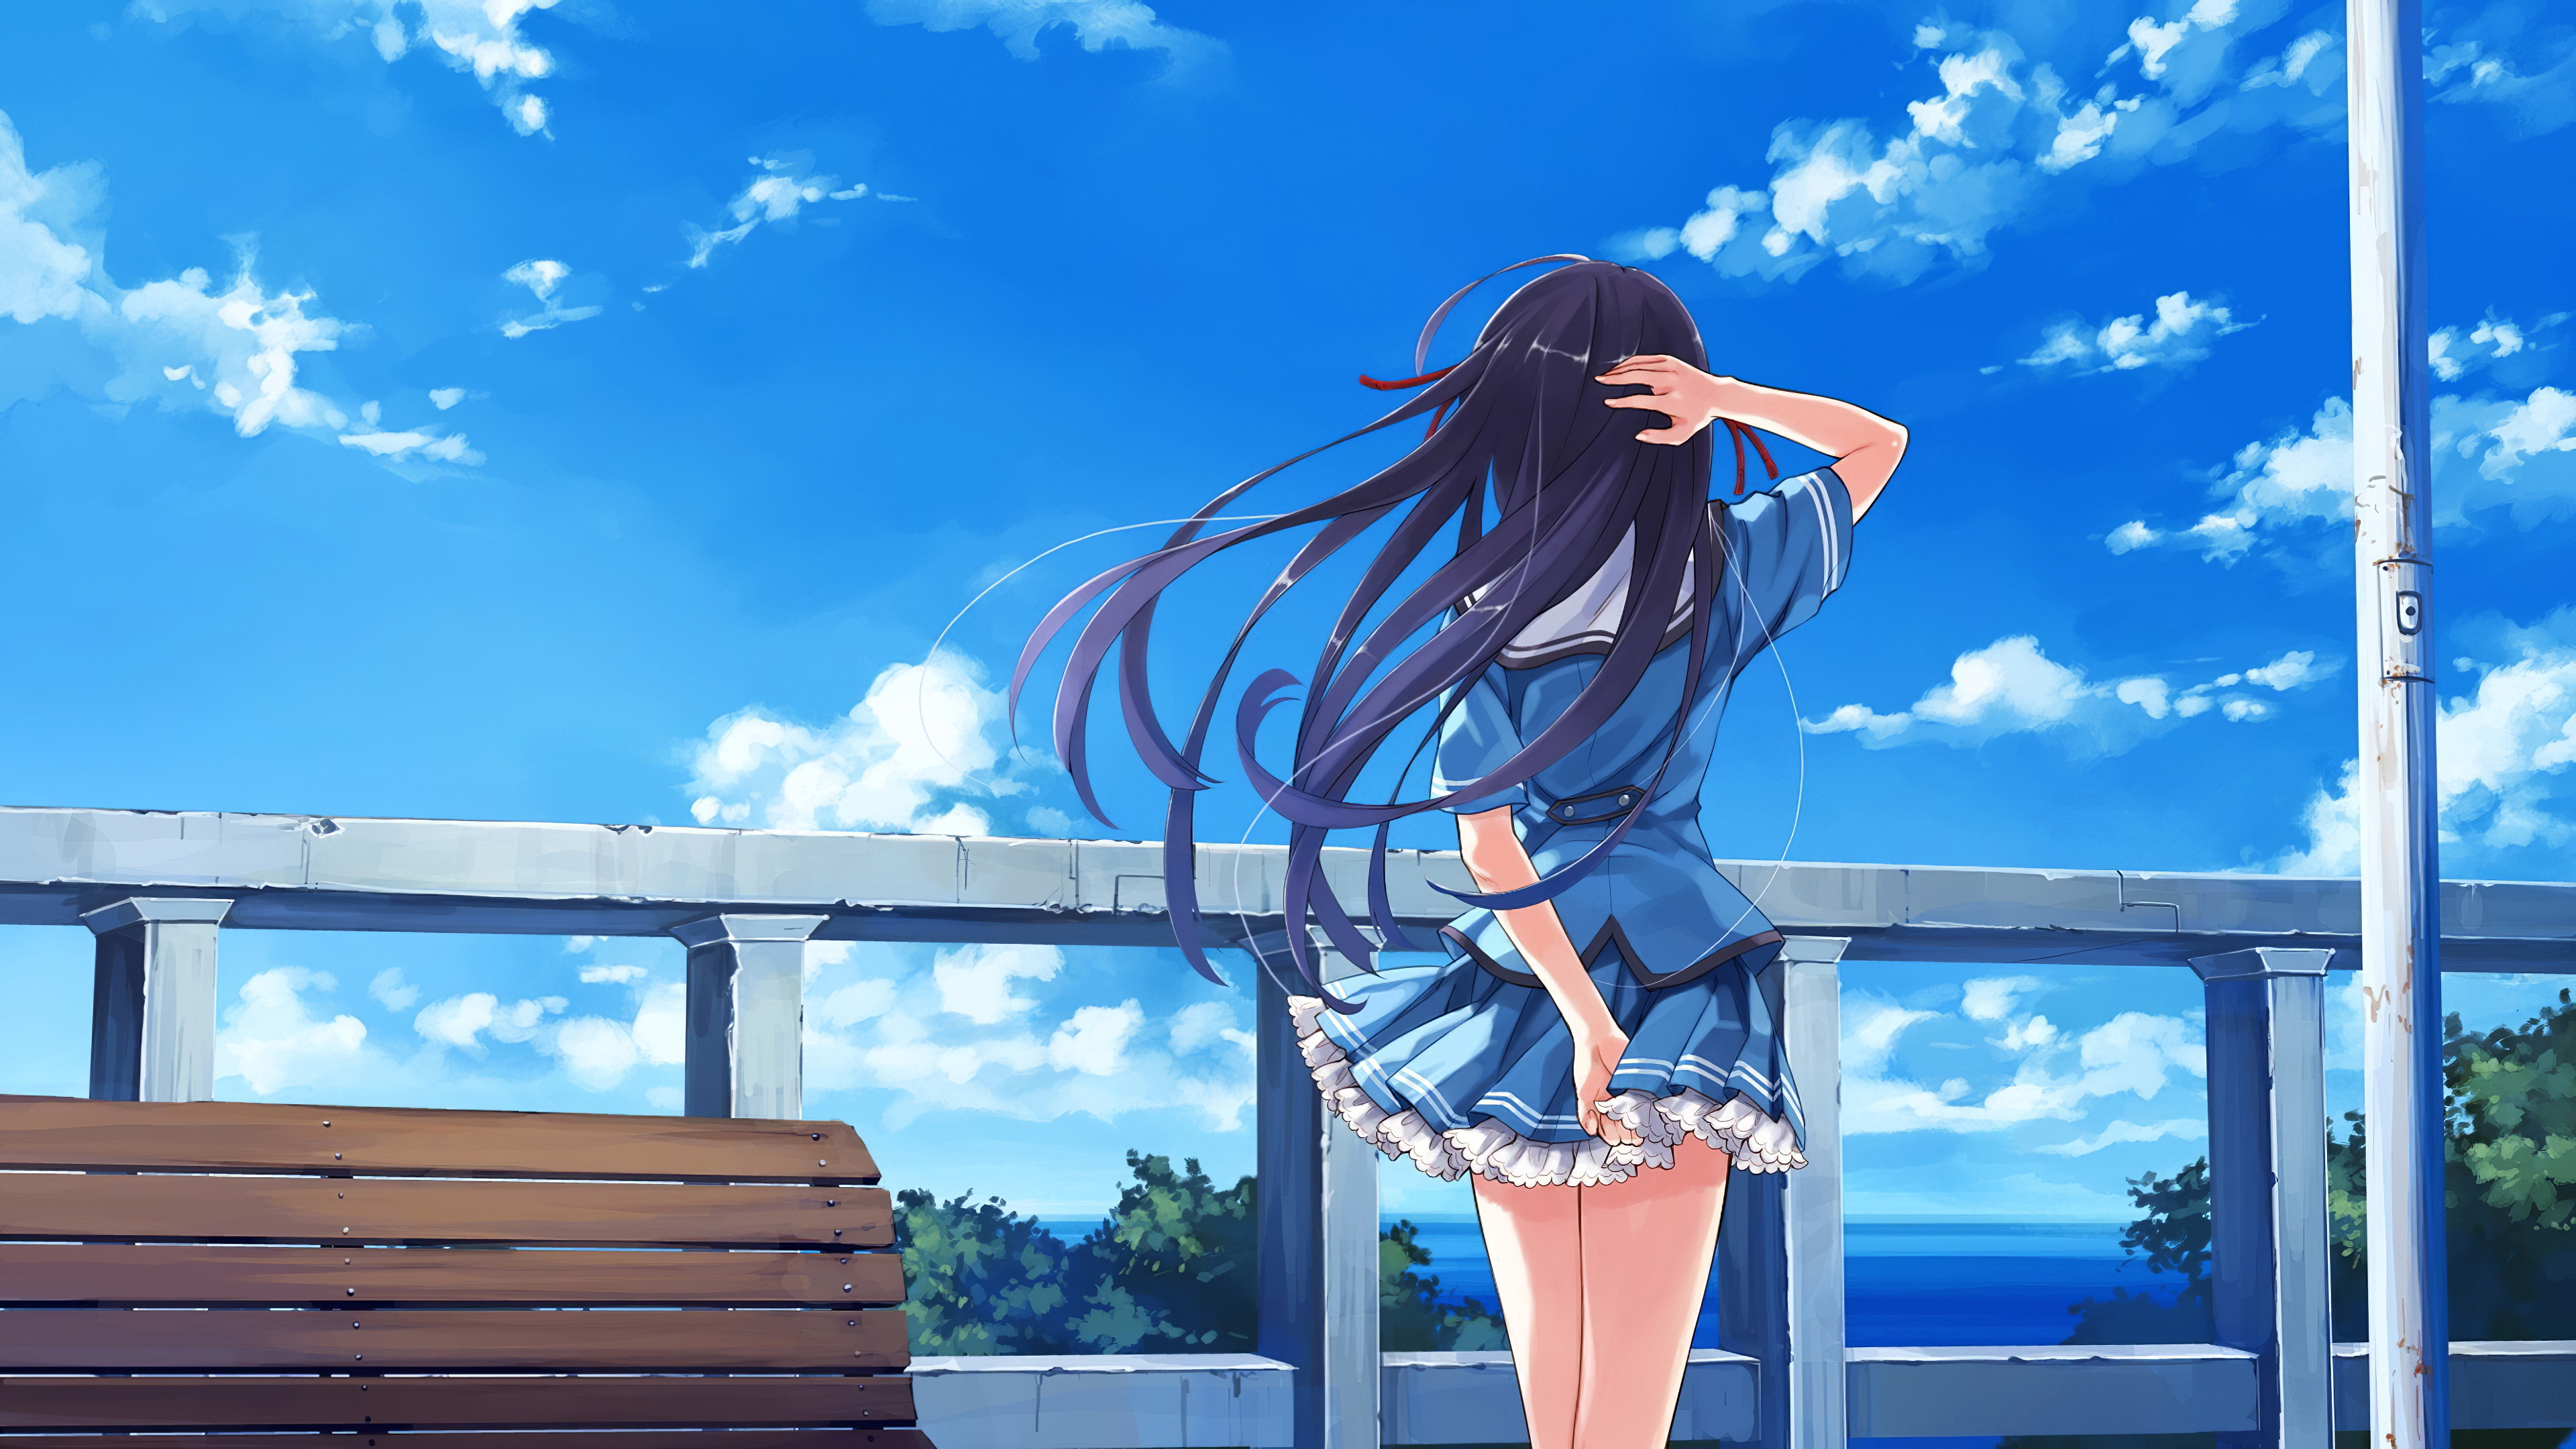 Anime 3840x2160 anime anime girls artwork digital art sky clouds school uniform schoolgirl